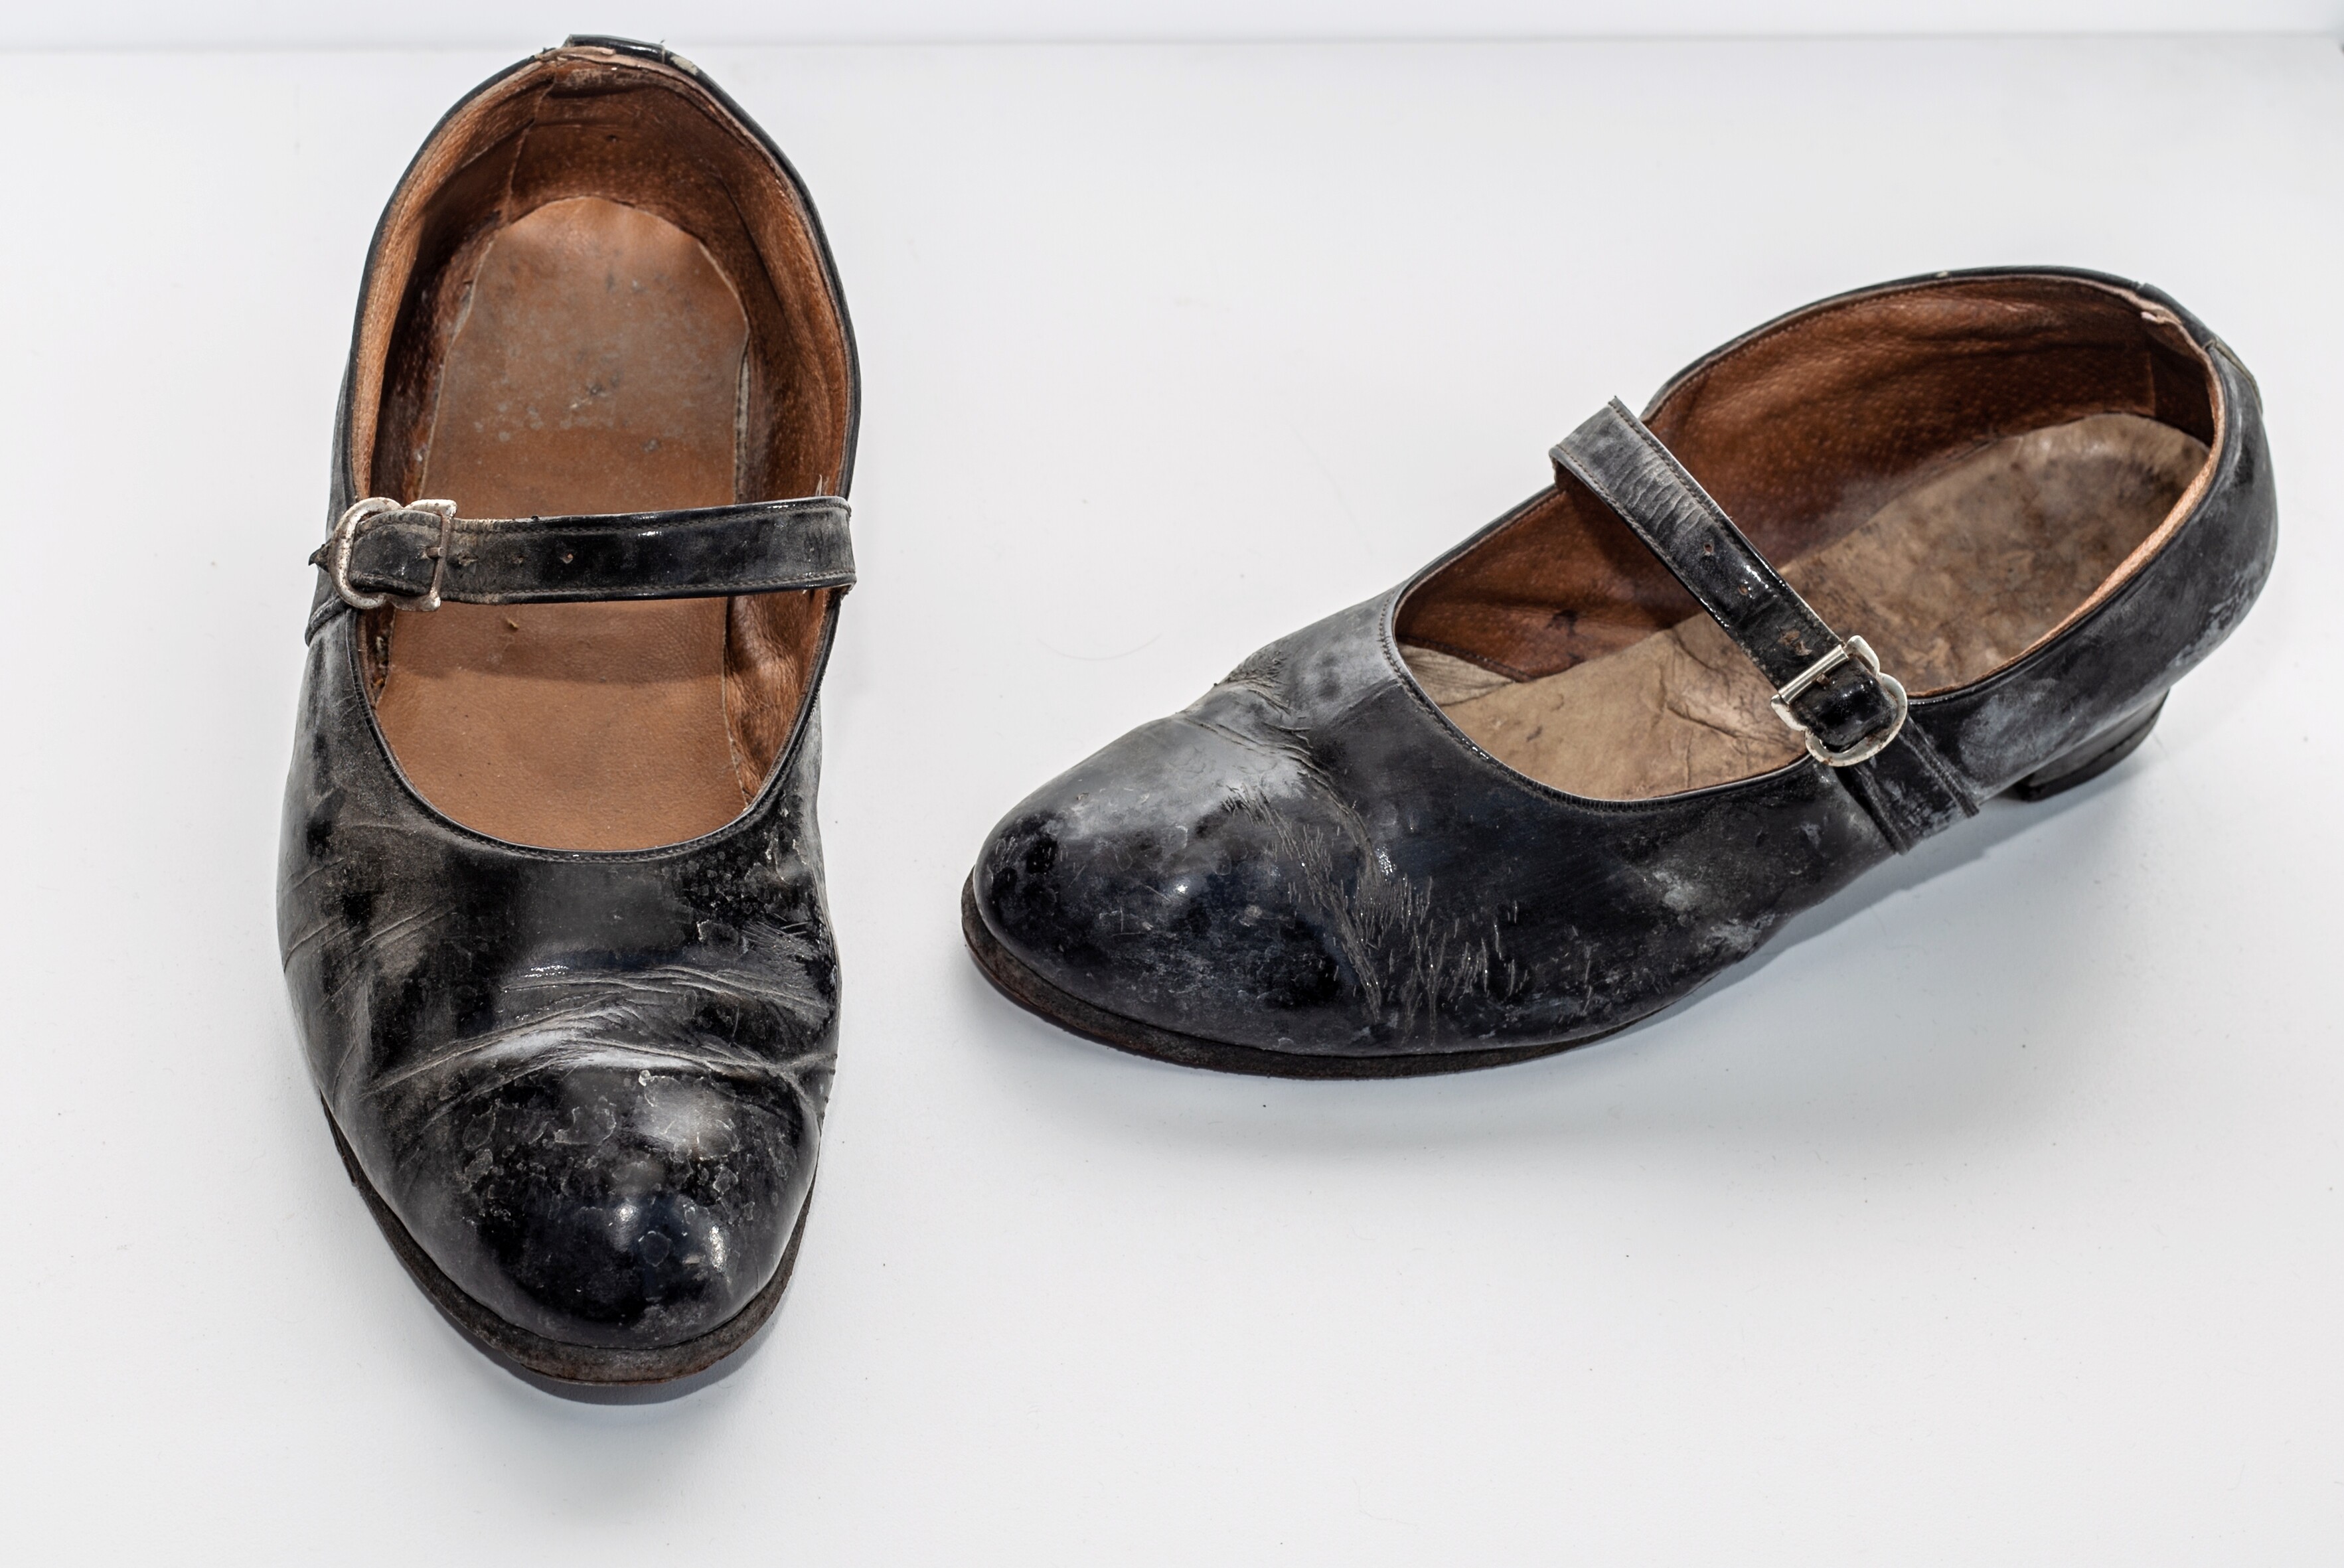 Félcipő "Lakkcipő" "Panglis cipő" (Ferenczy Múzeumi Centrum CC BY-NC-SA)